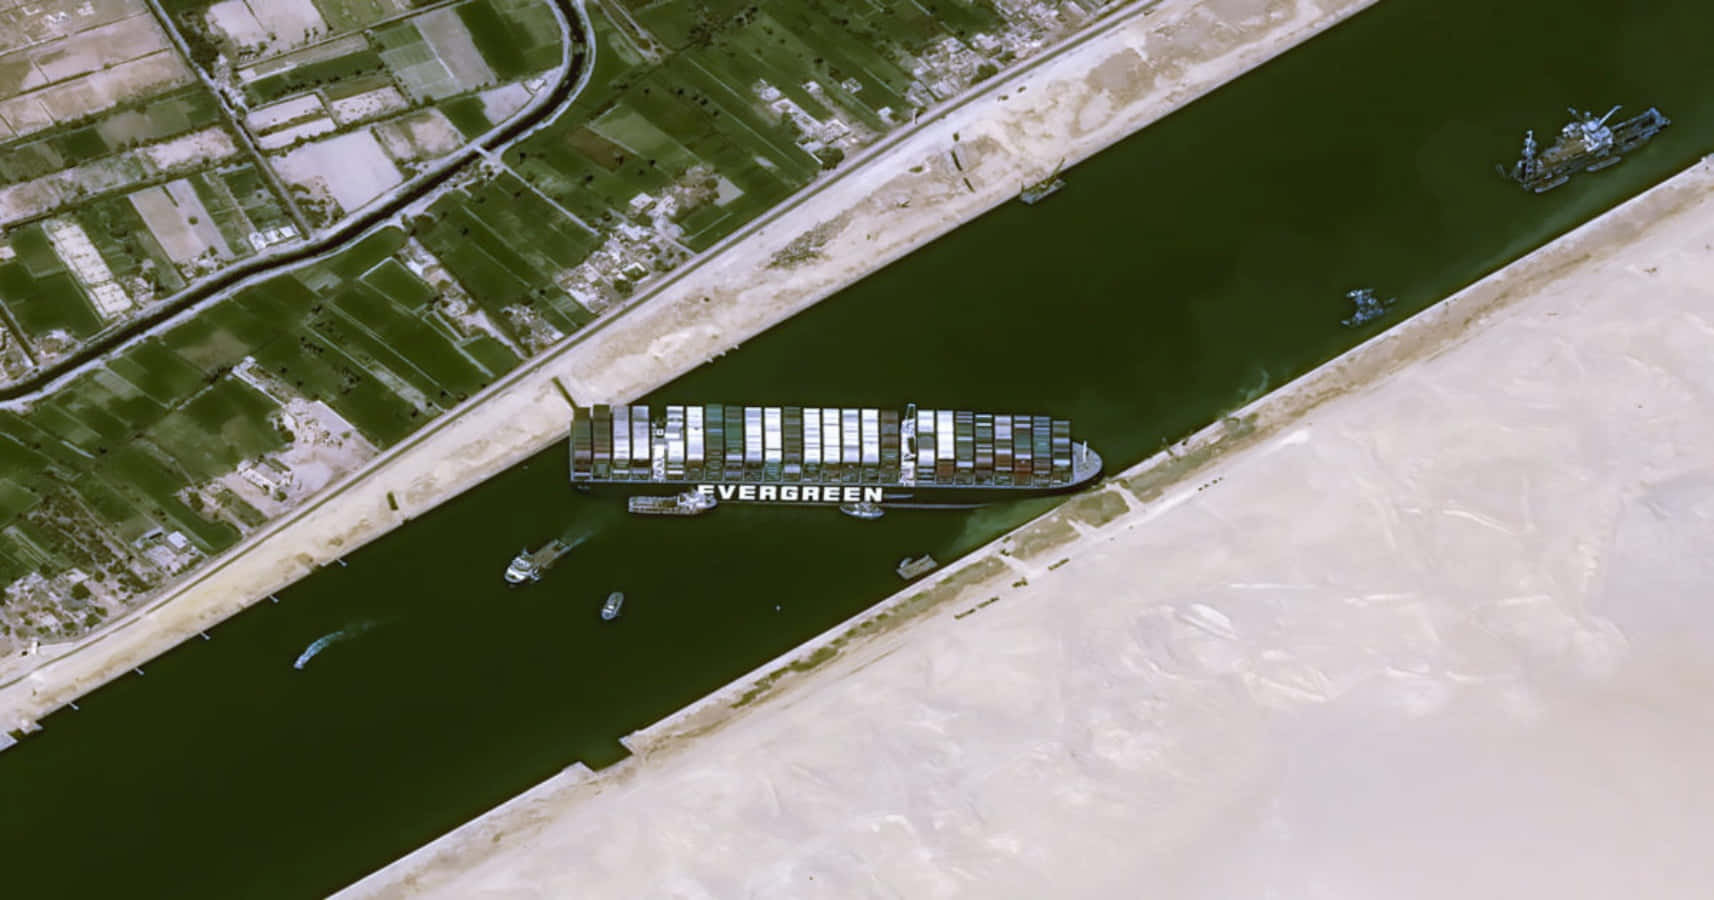 Vistada Una Barca Del Canale Di Suez.